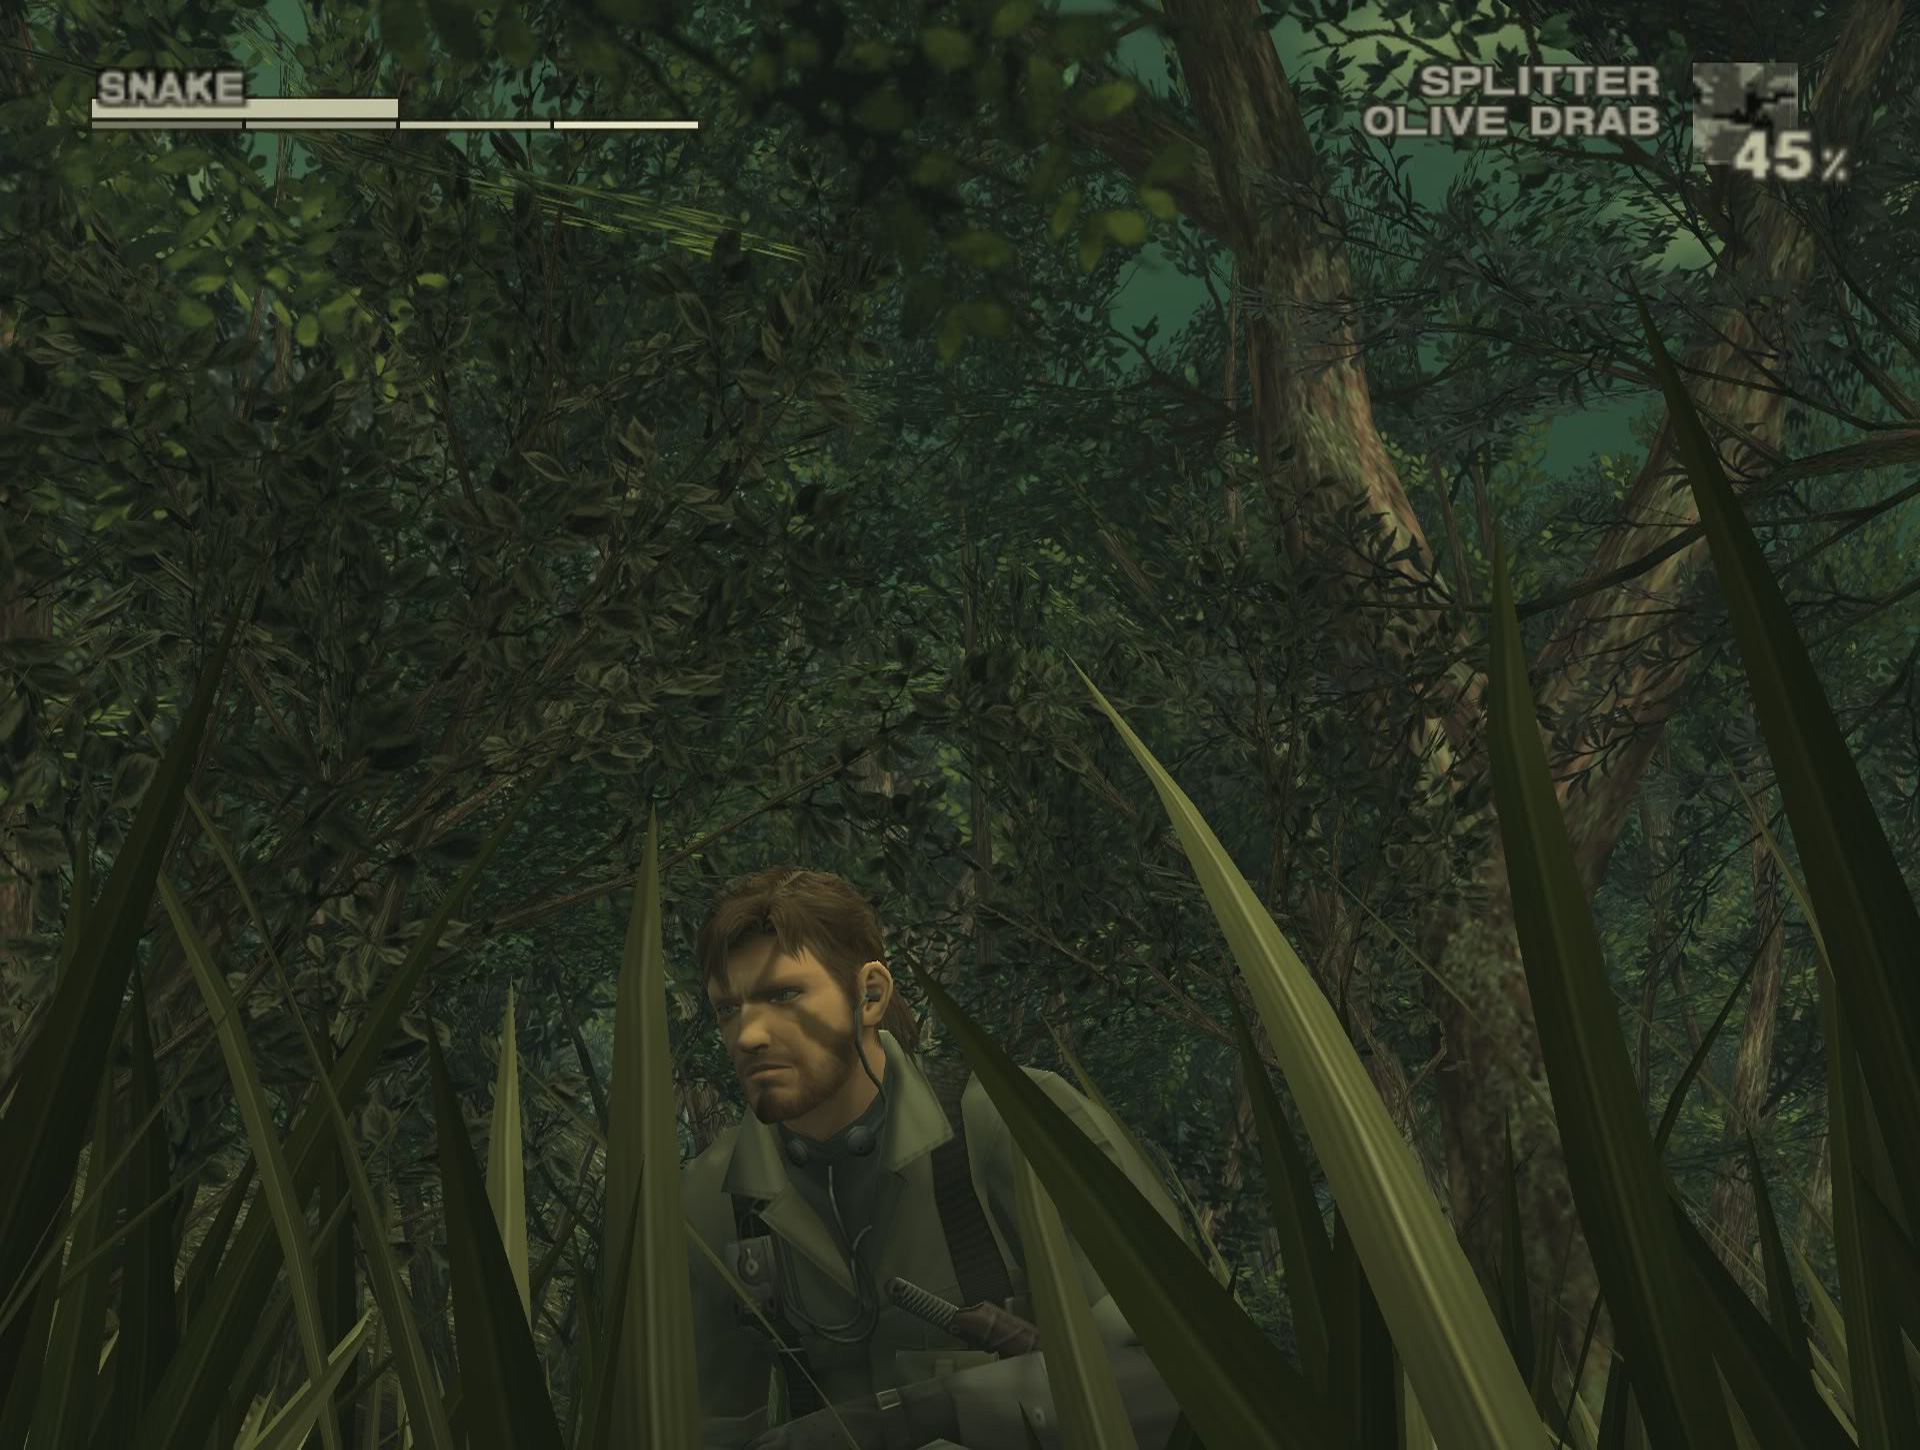 Metal Gear Solid 3 en HD